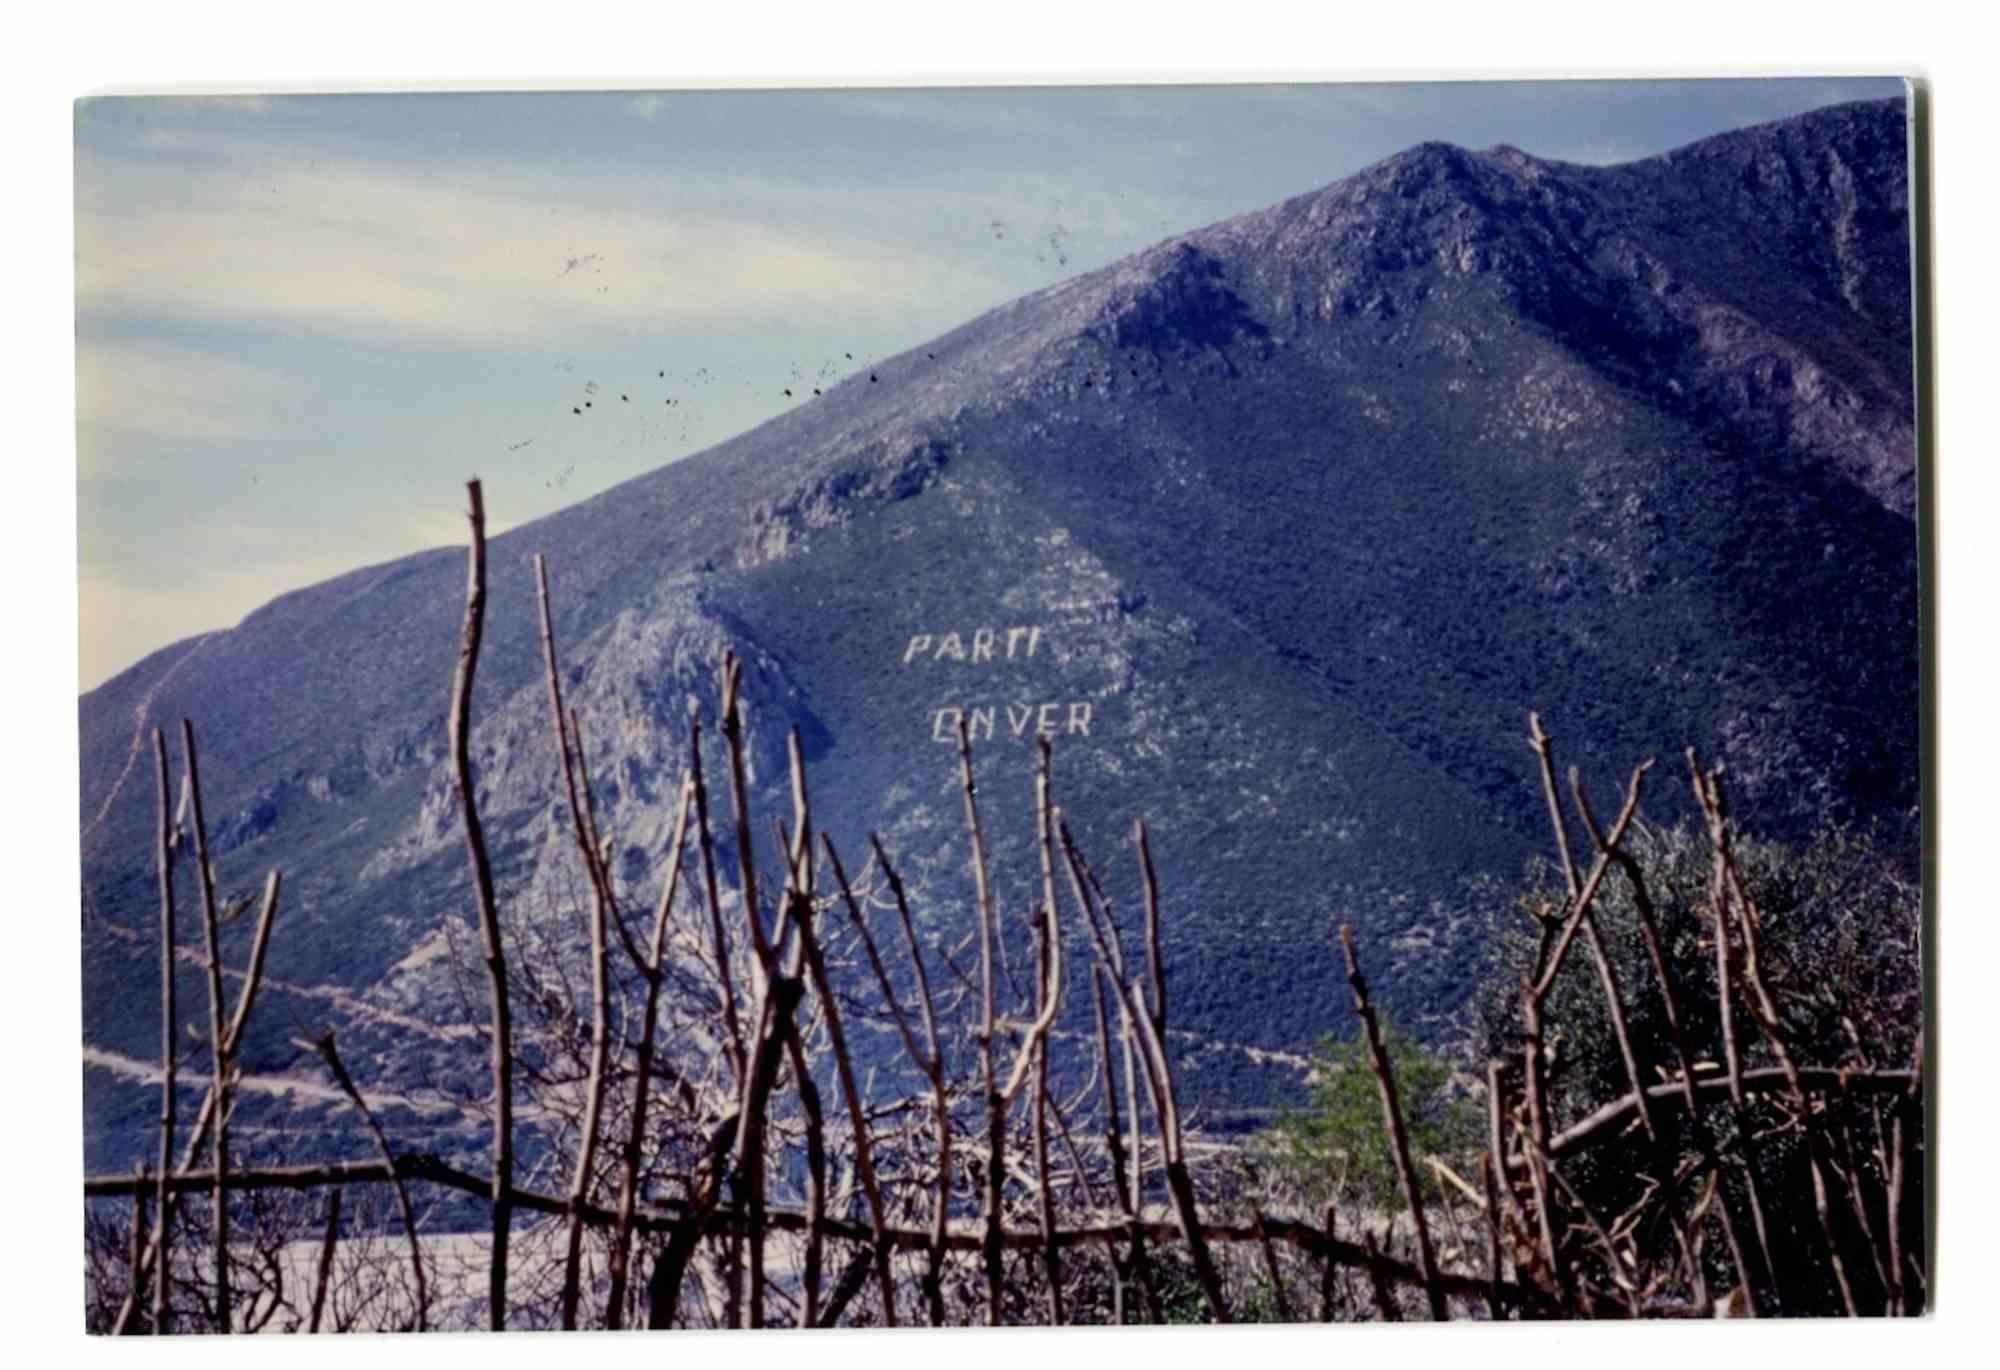 Unknown Landscape Photograph - Reportage from Albania - Tirana - Photograph - Late 1970s